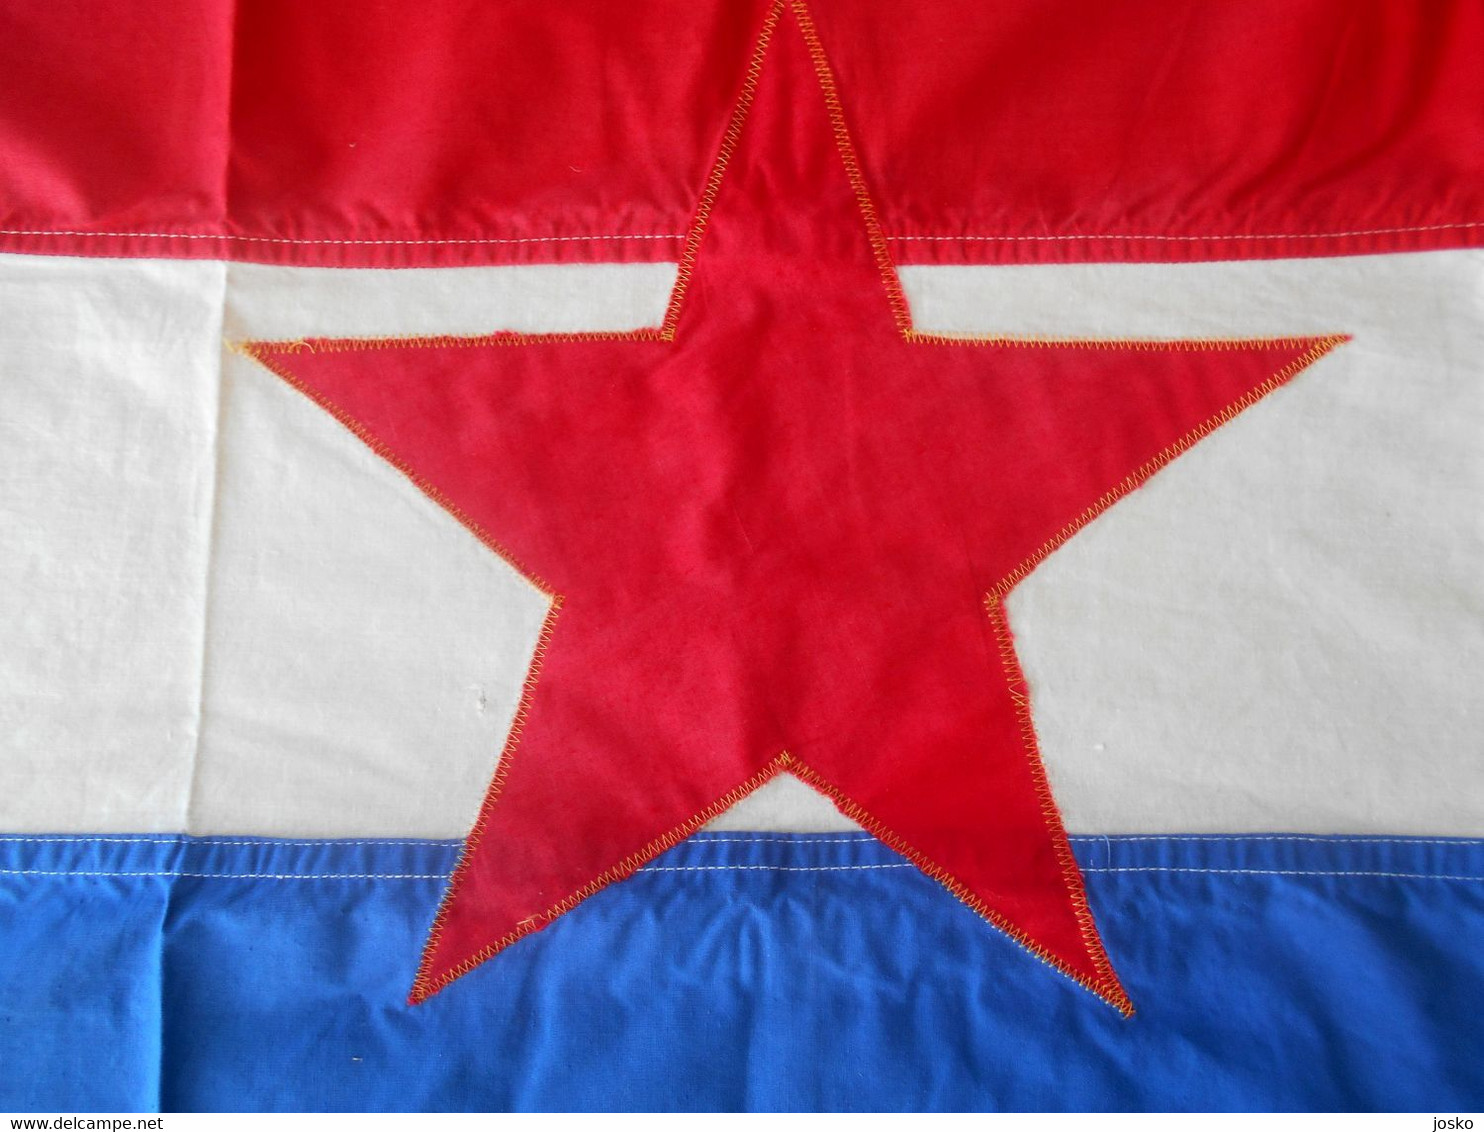 CROATIA Ex YUGOSLAVIA Original Vintage Communist Flag 1980s LARGER SIZE Drapeau Flagge Bandiera Kroatien Croatie Croazia - Drapeaux